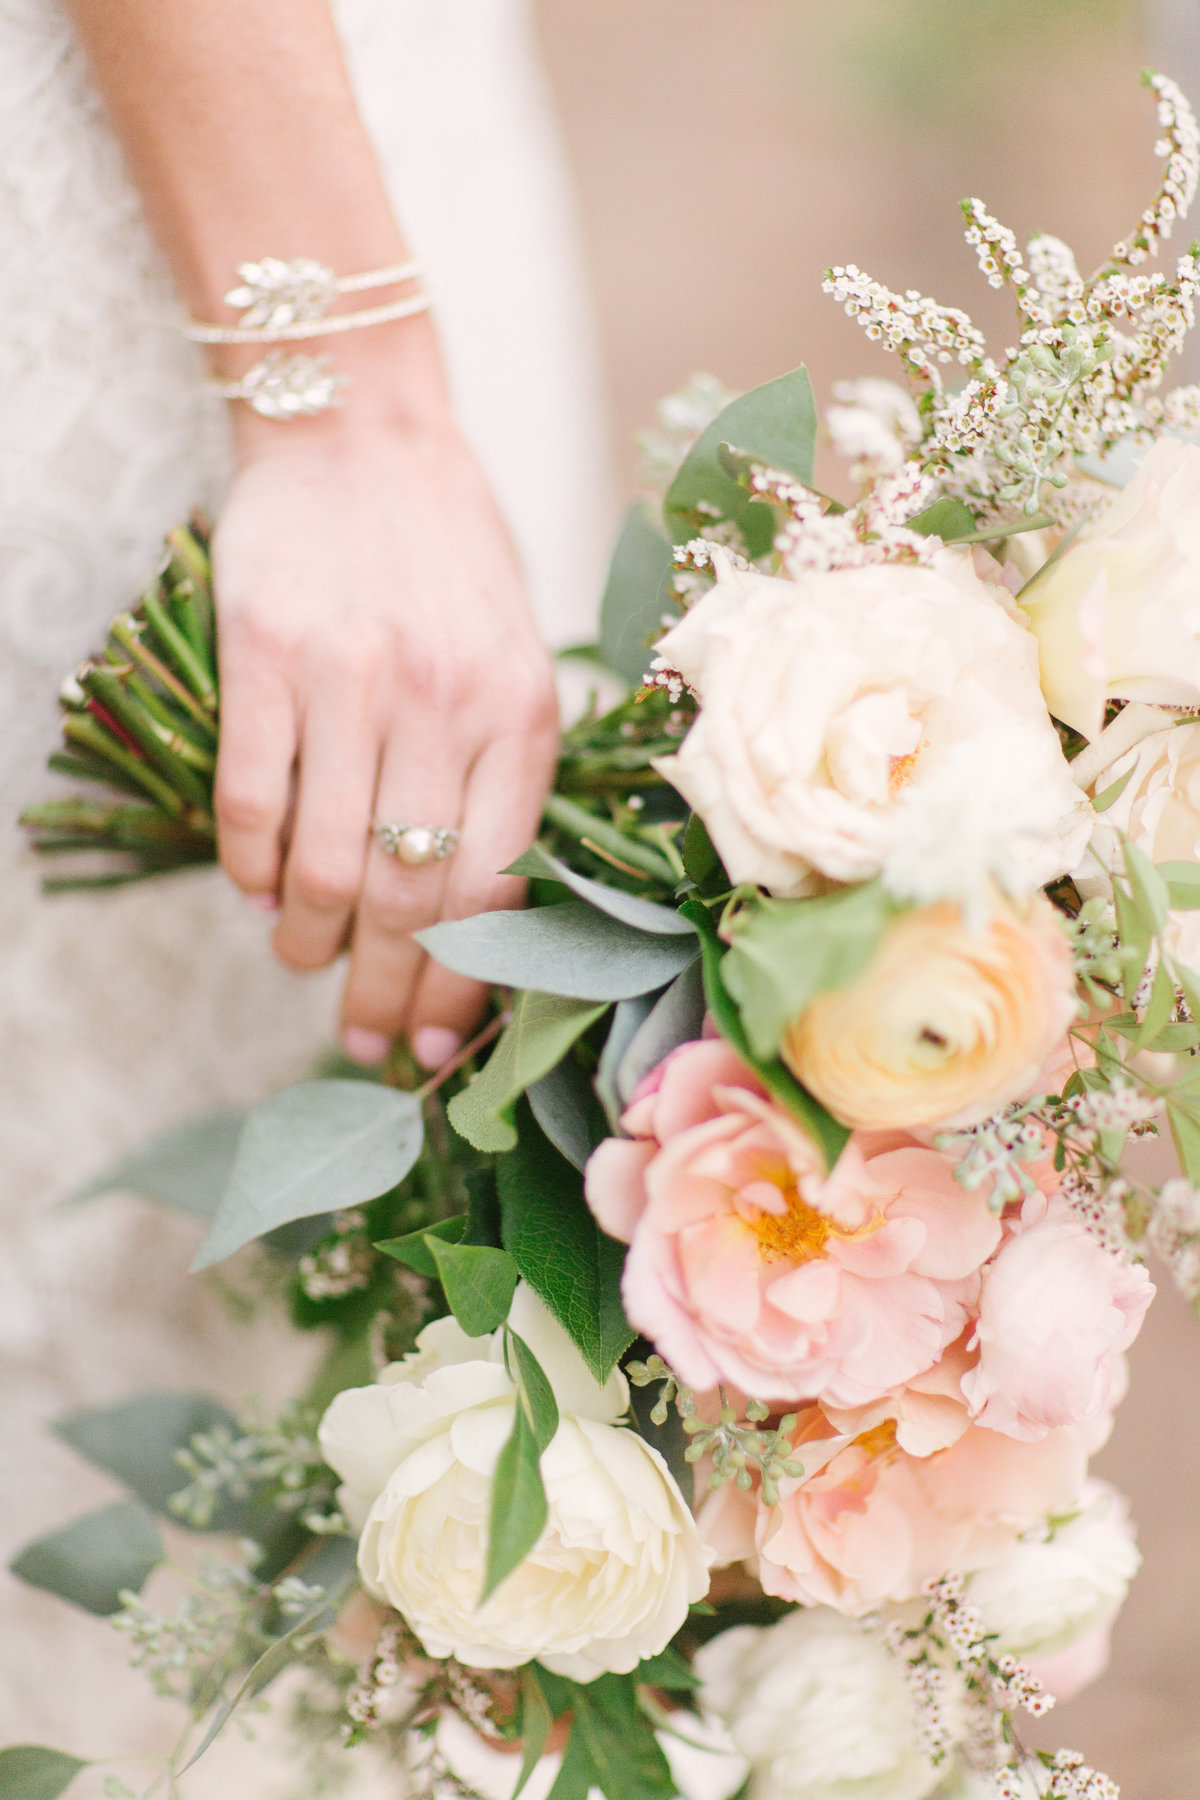 Brides jewelry and bouquet at Firestone Vineyard wedding